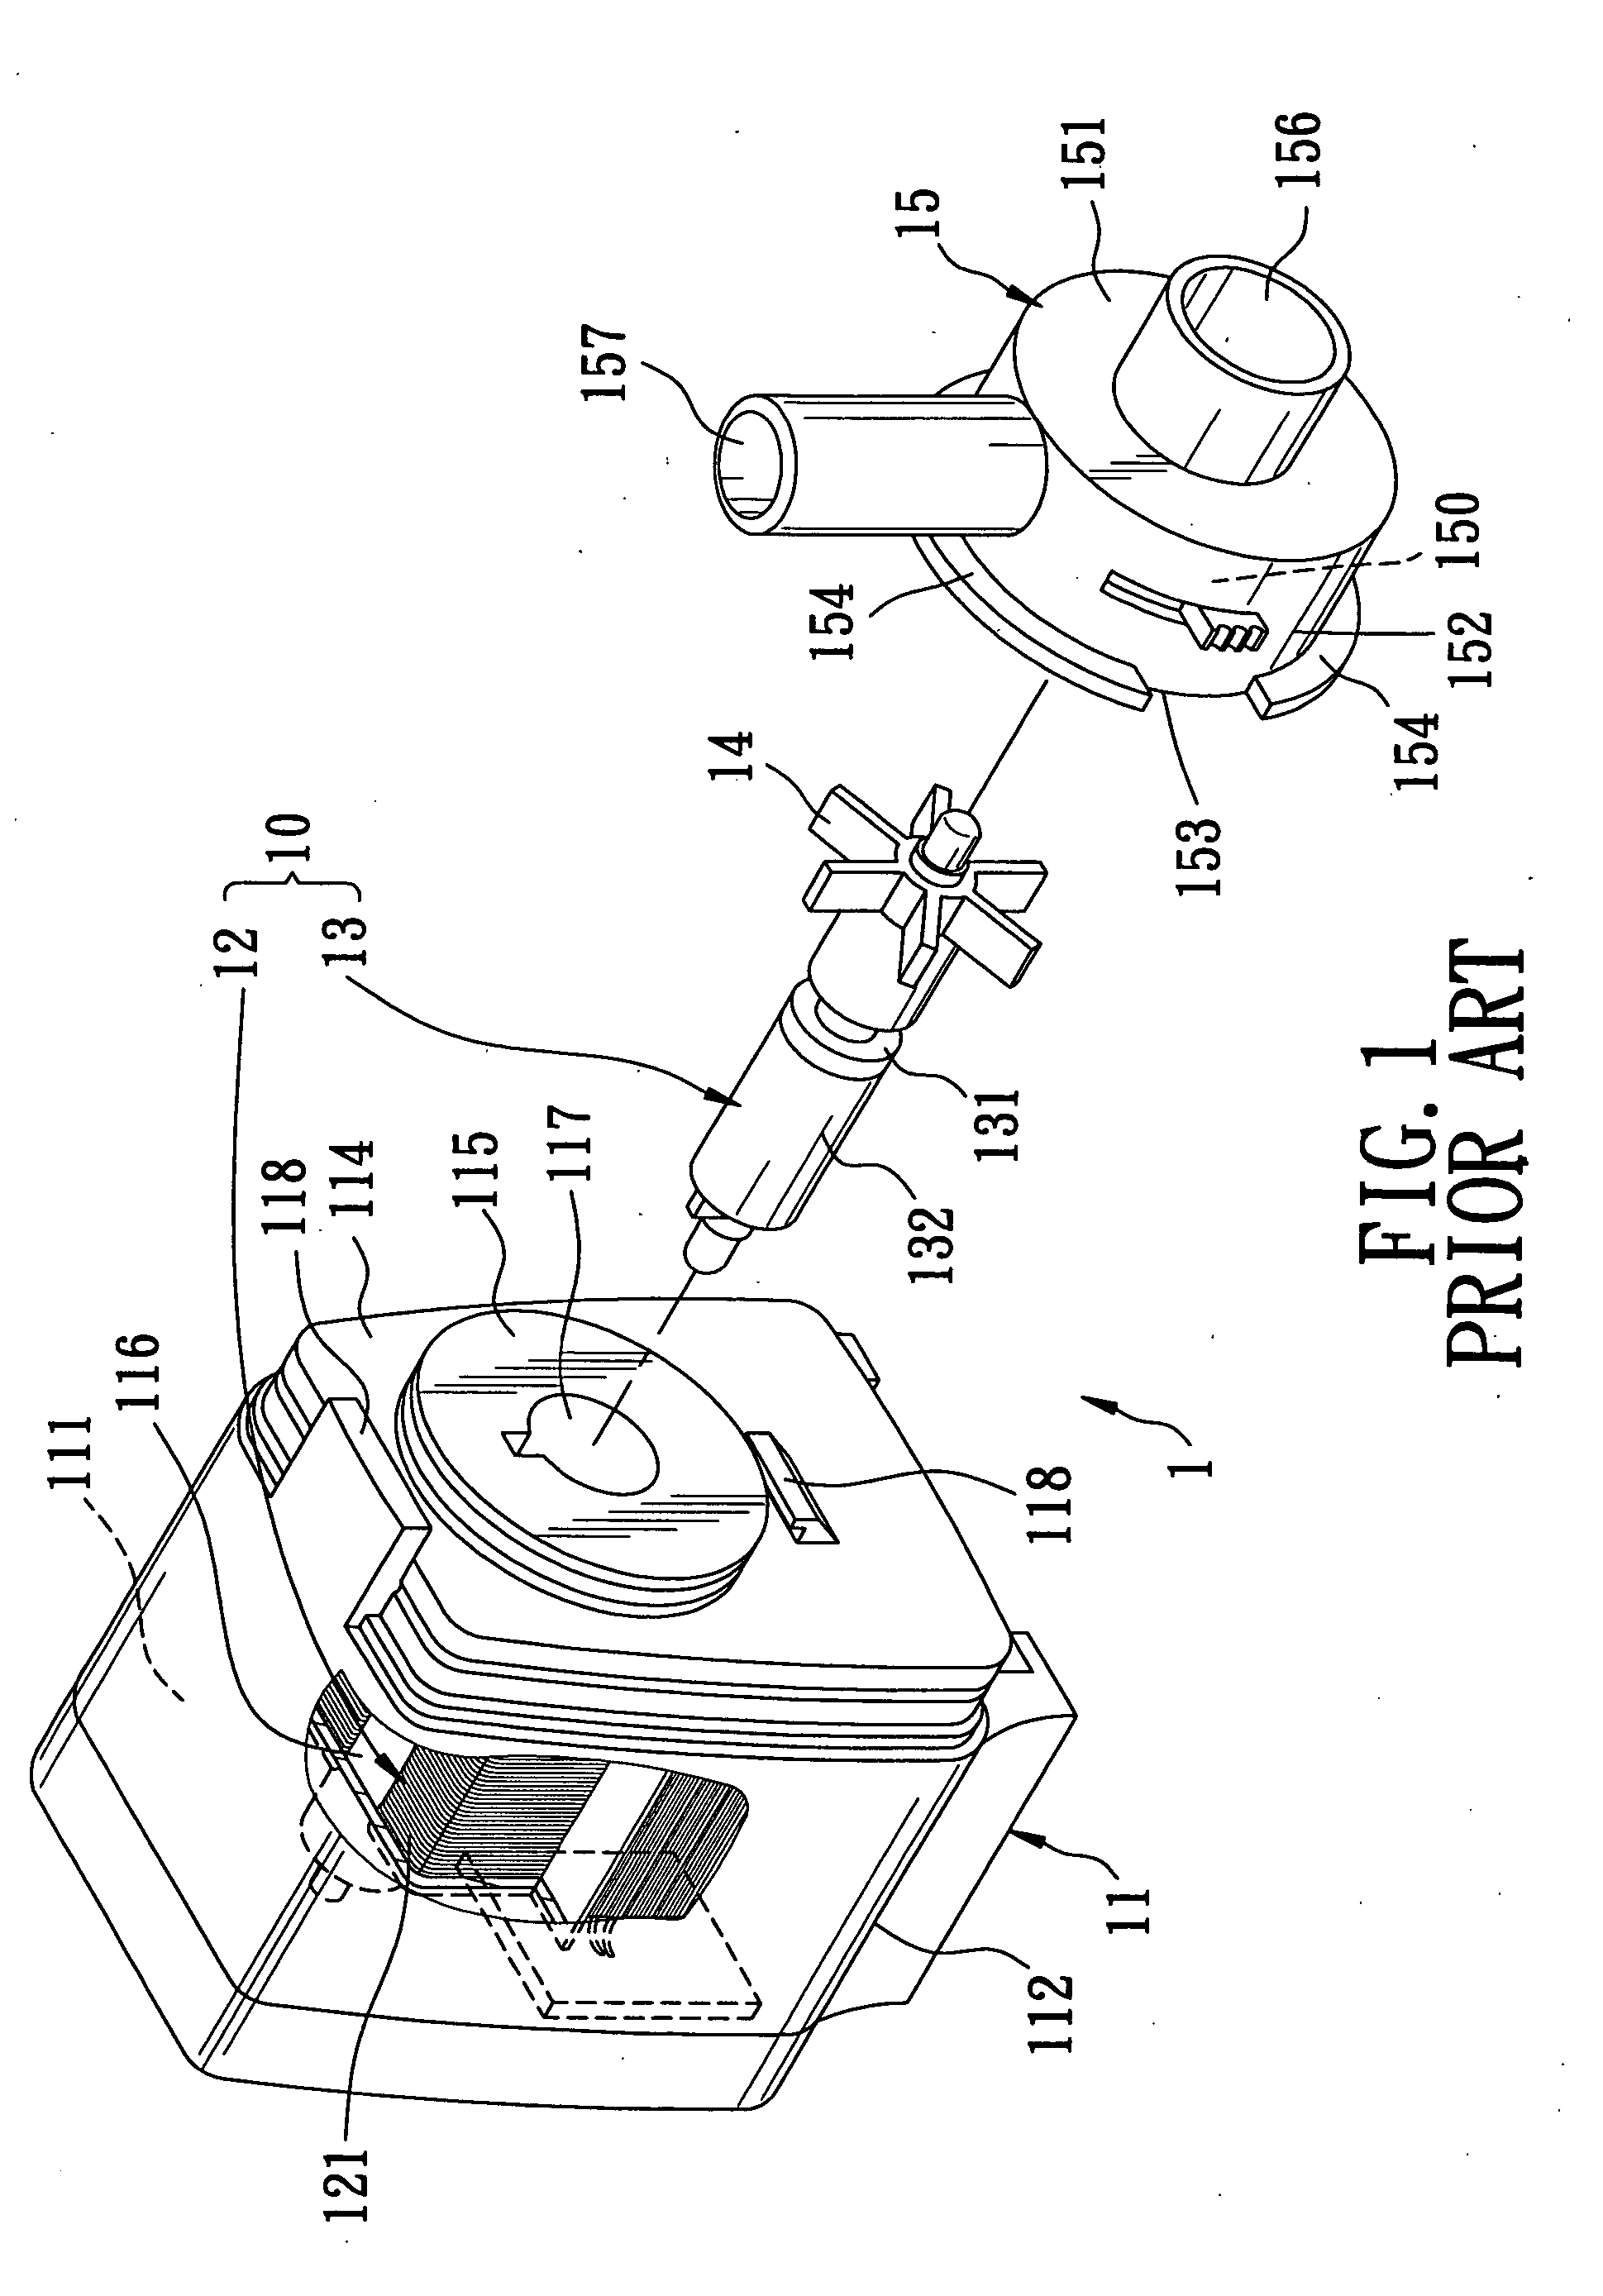 Brushless motor pump